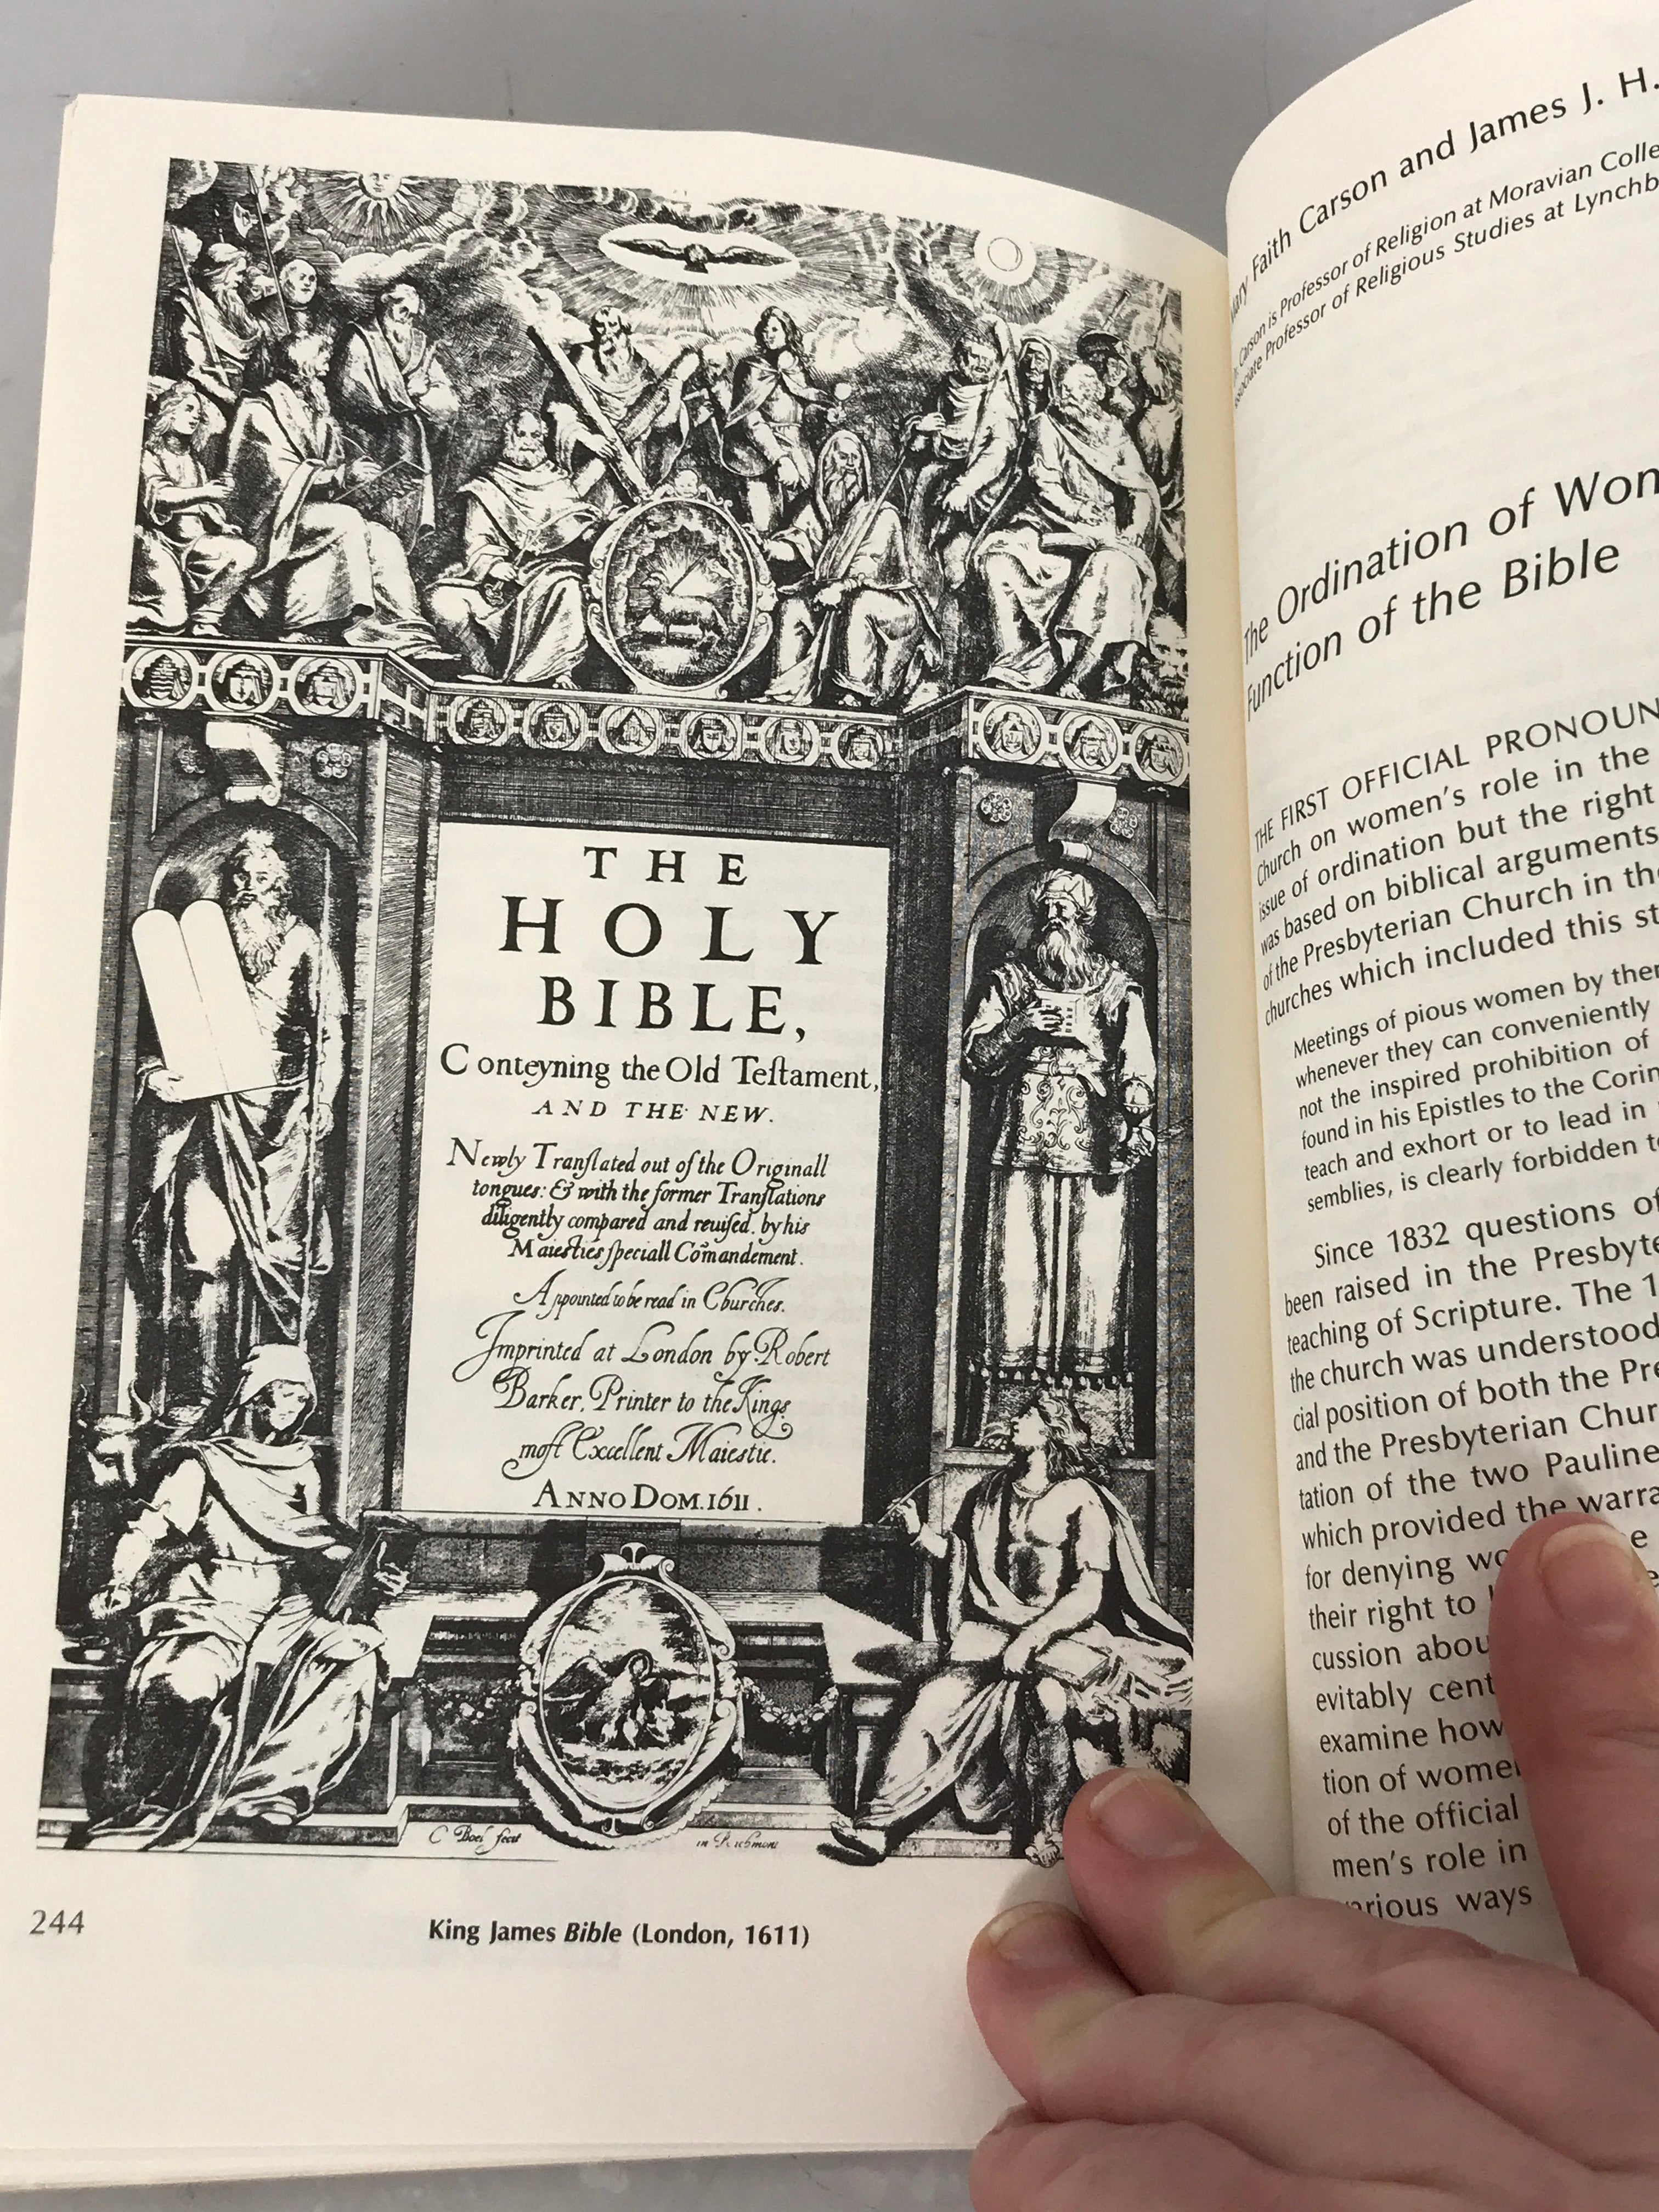 Presbyterians and Biblical Authority Journal of Presbyterian History Summer 1981 SC